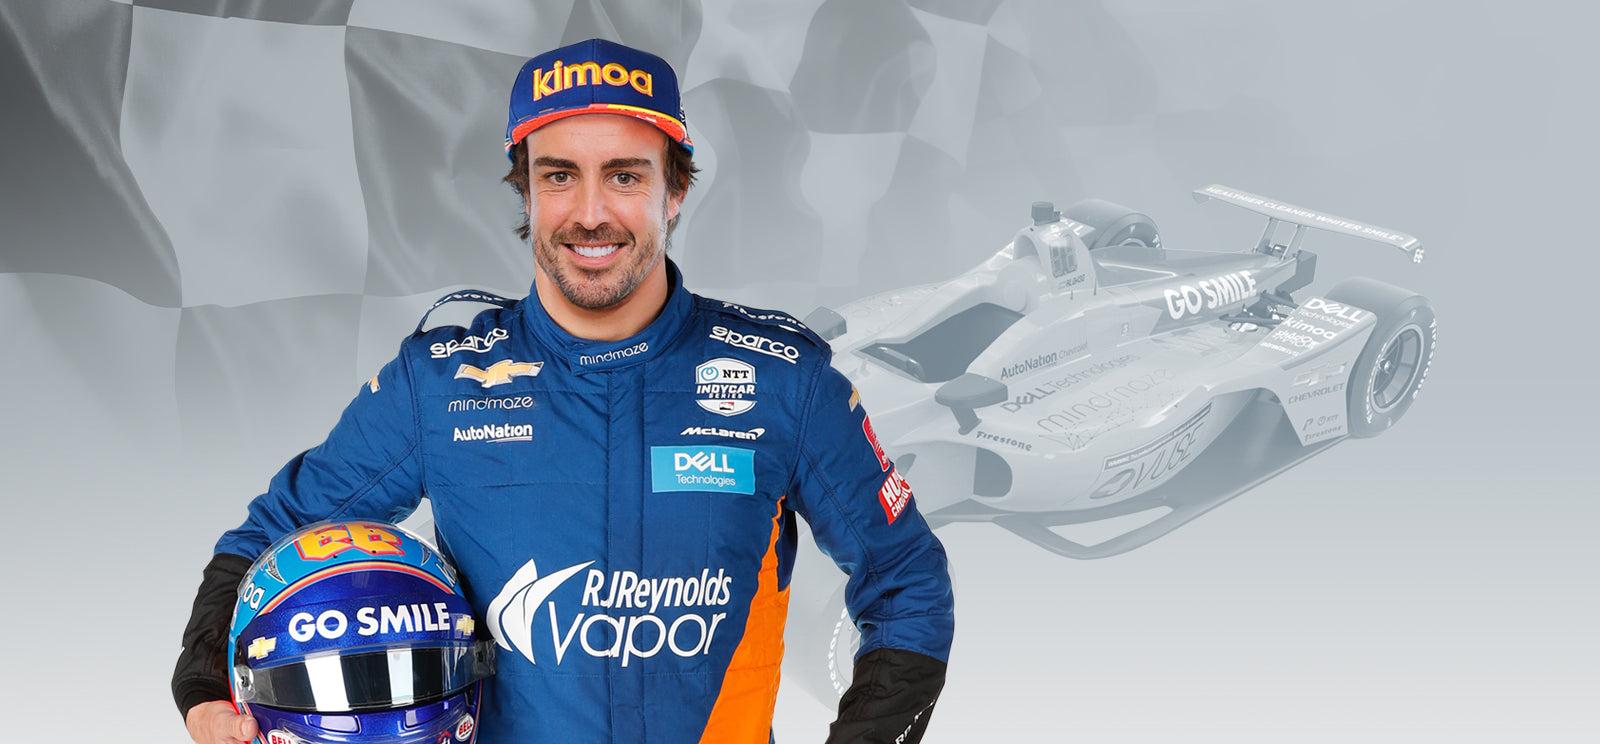 McLaren Racing & GO SMILE Announce Indy 500 Partnership